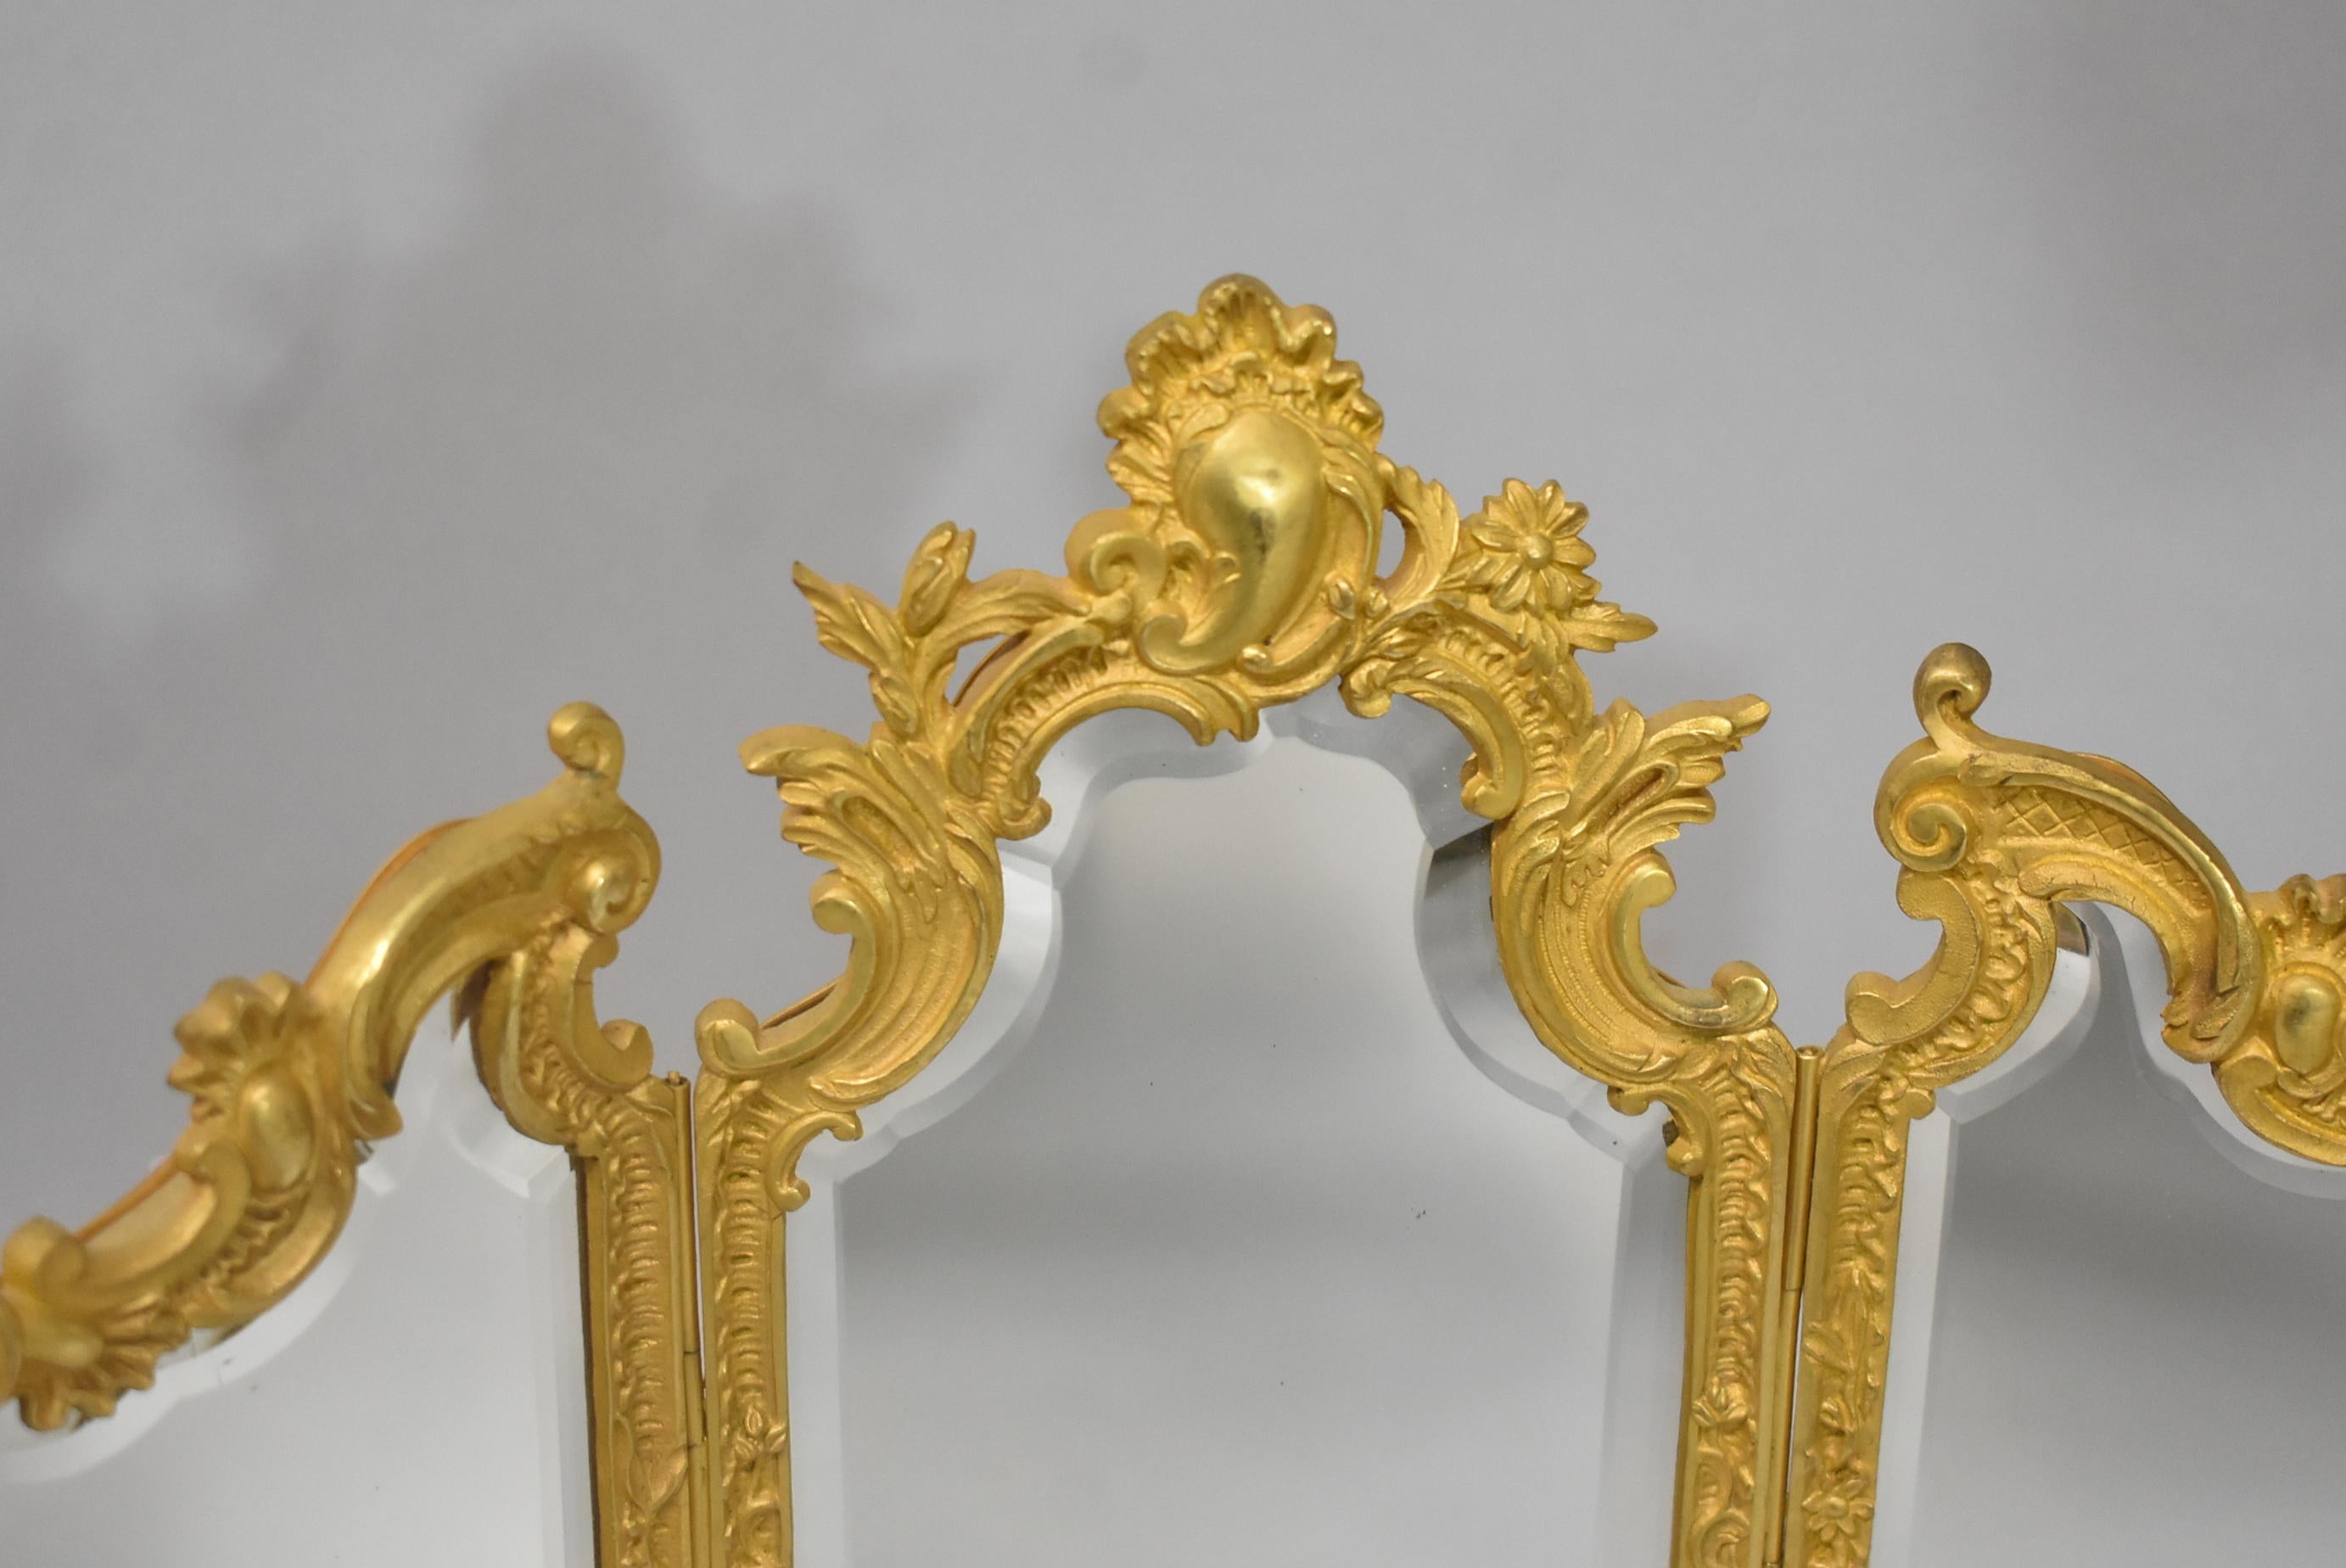 Miniature doré gold triptych beveled dresser or vanity mirror. Female figural face lower center.